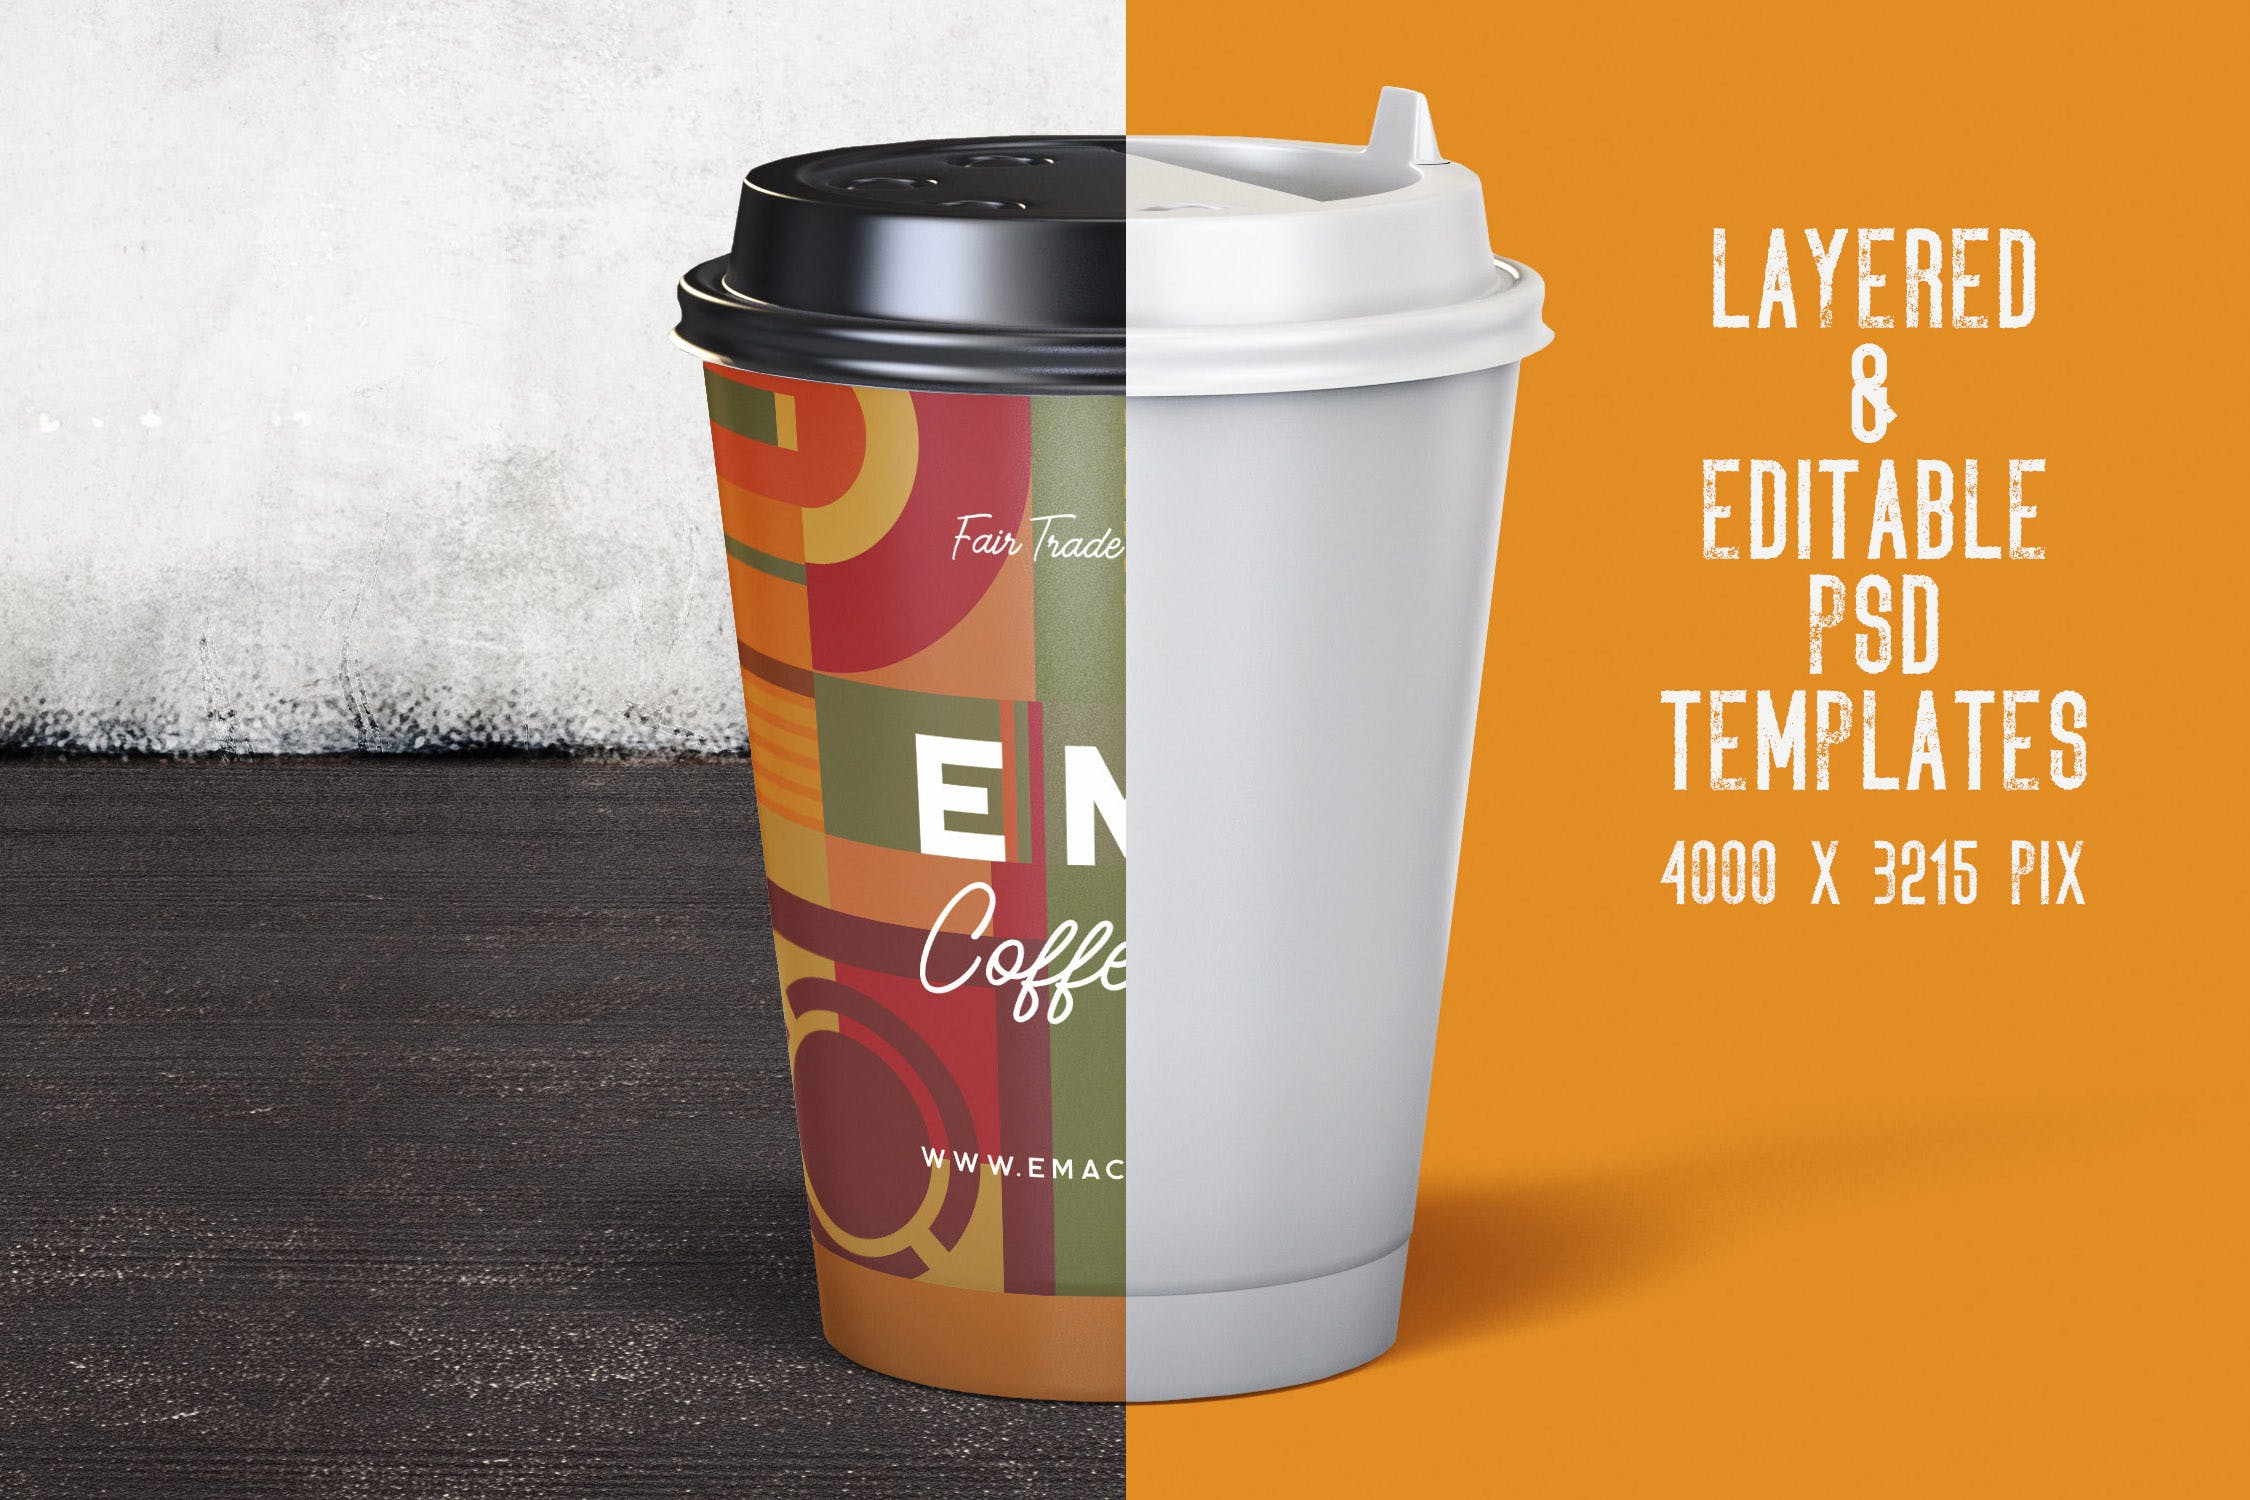 8个咖啡纸杯外观设计效果图素材库精选 8 Coffee Paper Cup Mockups插图(1)